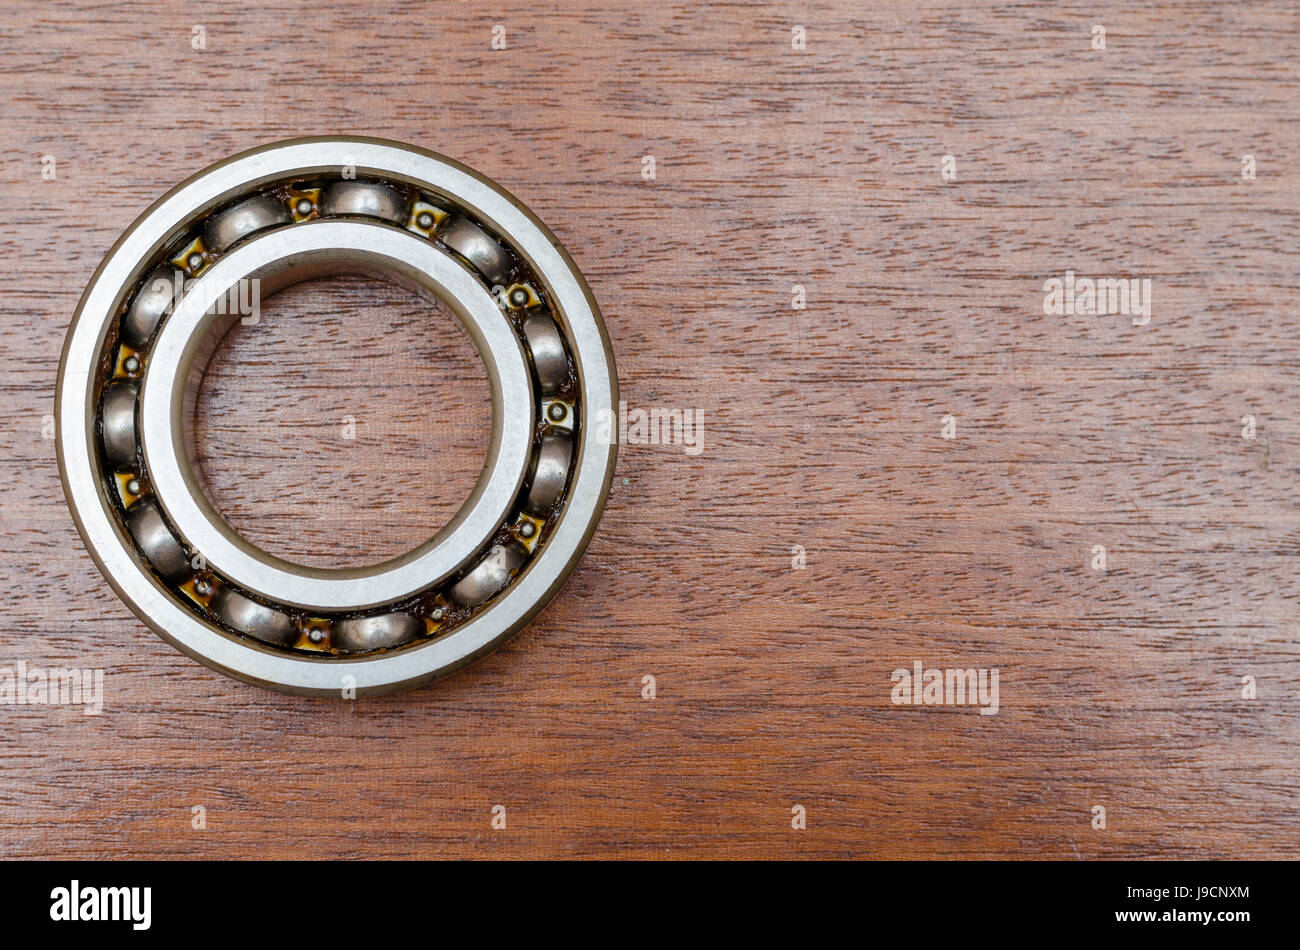 steel ball bearings on wooden table Stock Photo